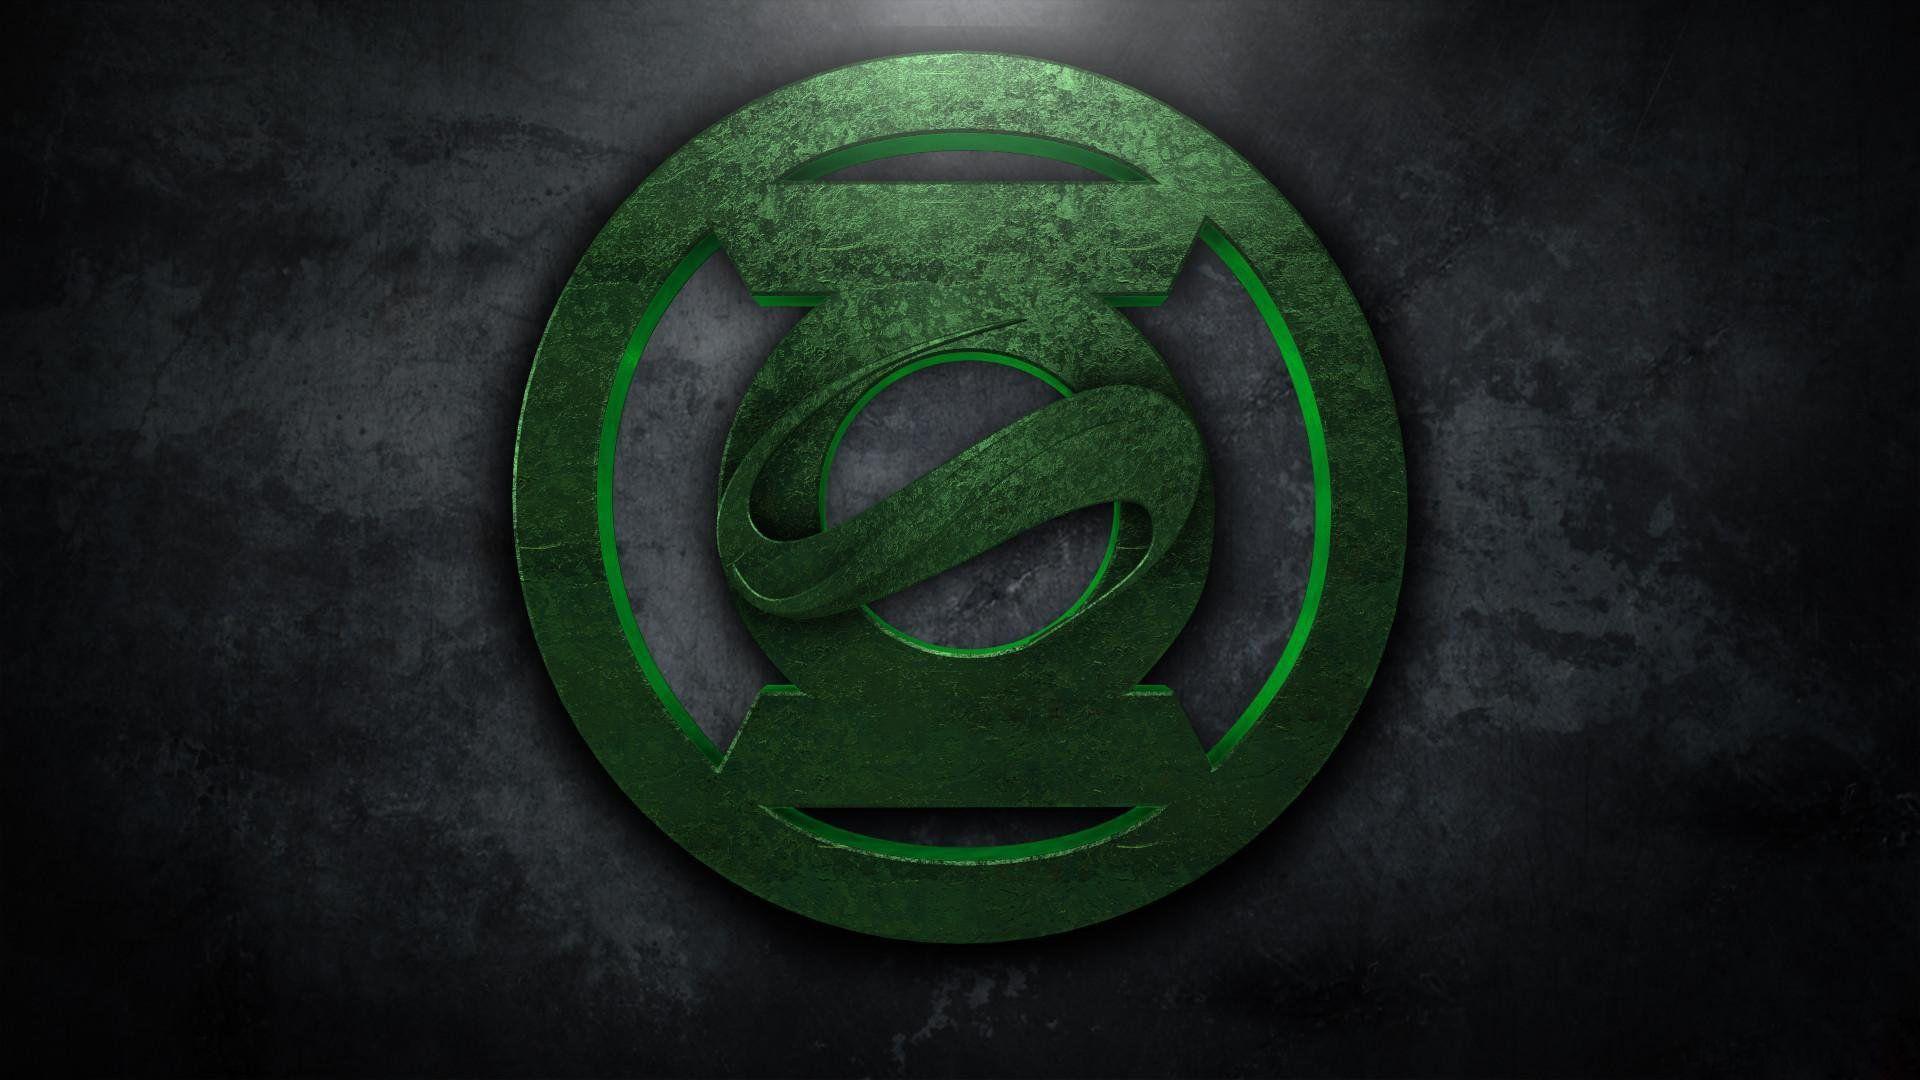 green lantern logo wallpaper